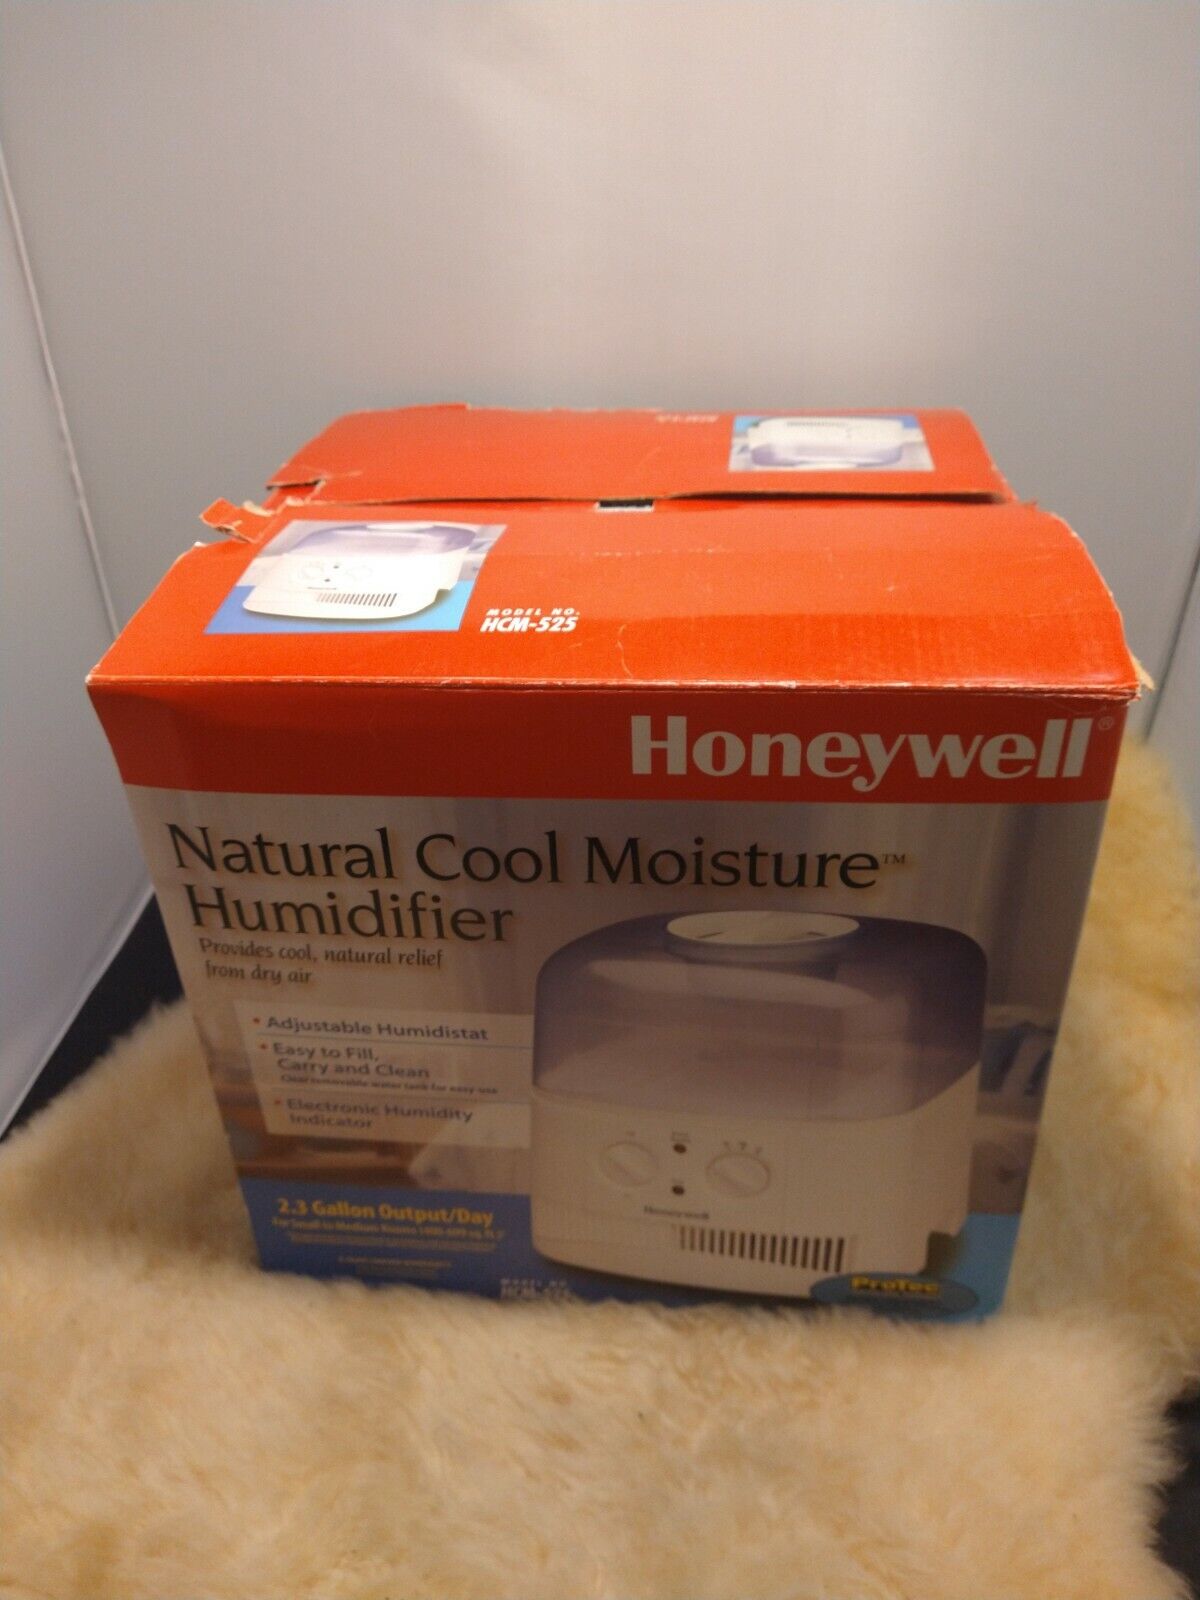 HUMIDIFIER HONEYWELL NATURAL COOL MOISTURE HUMIDIFIER HCM-525 -